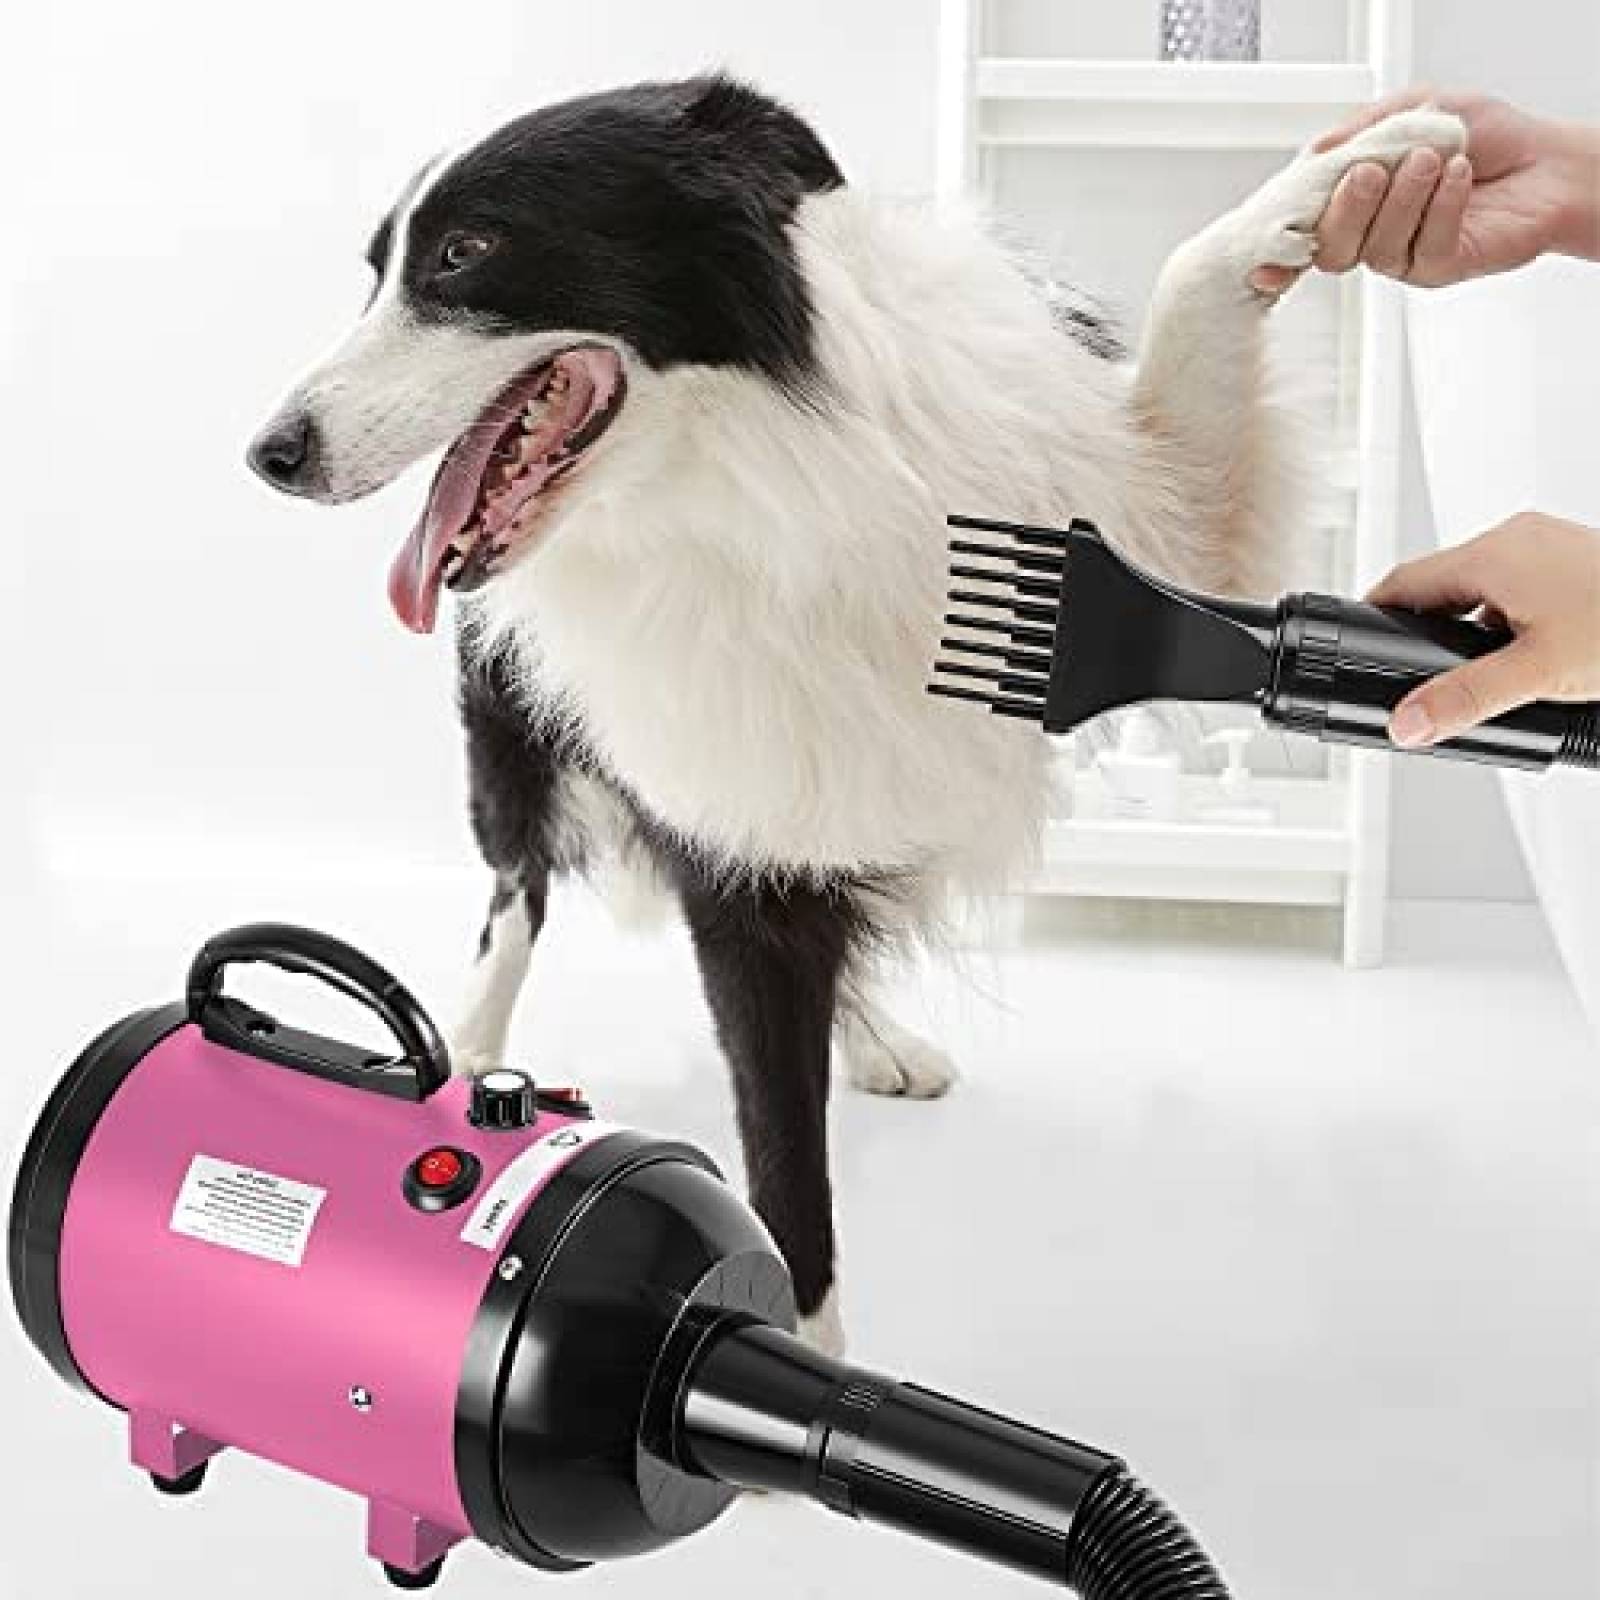 Secador de pelo para perros para aseo de perros, secadora de alta velocidad  para perros, secadora de mascotas de velocidad ajustable continua, secador